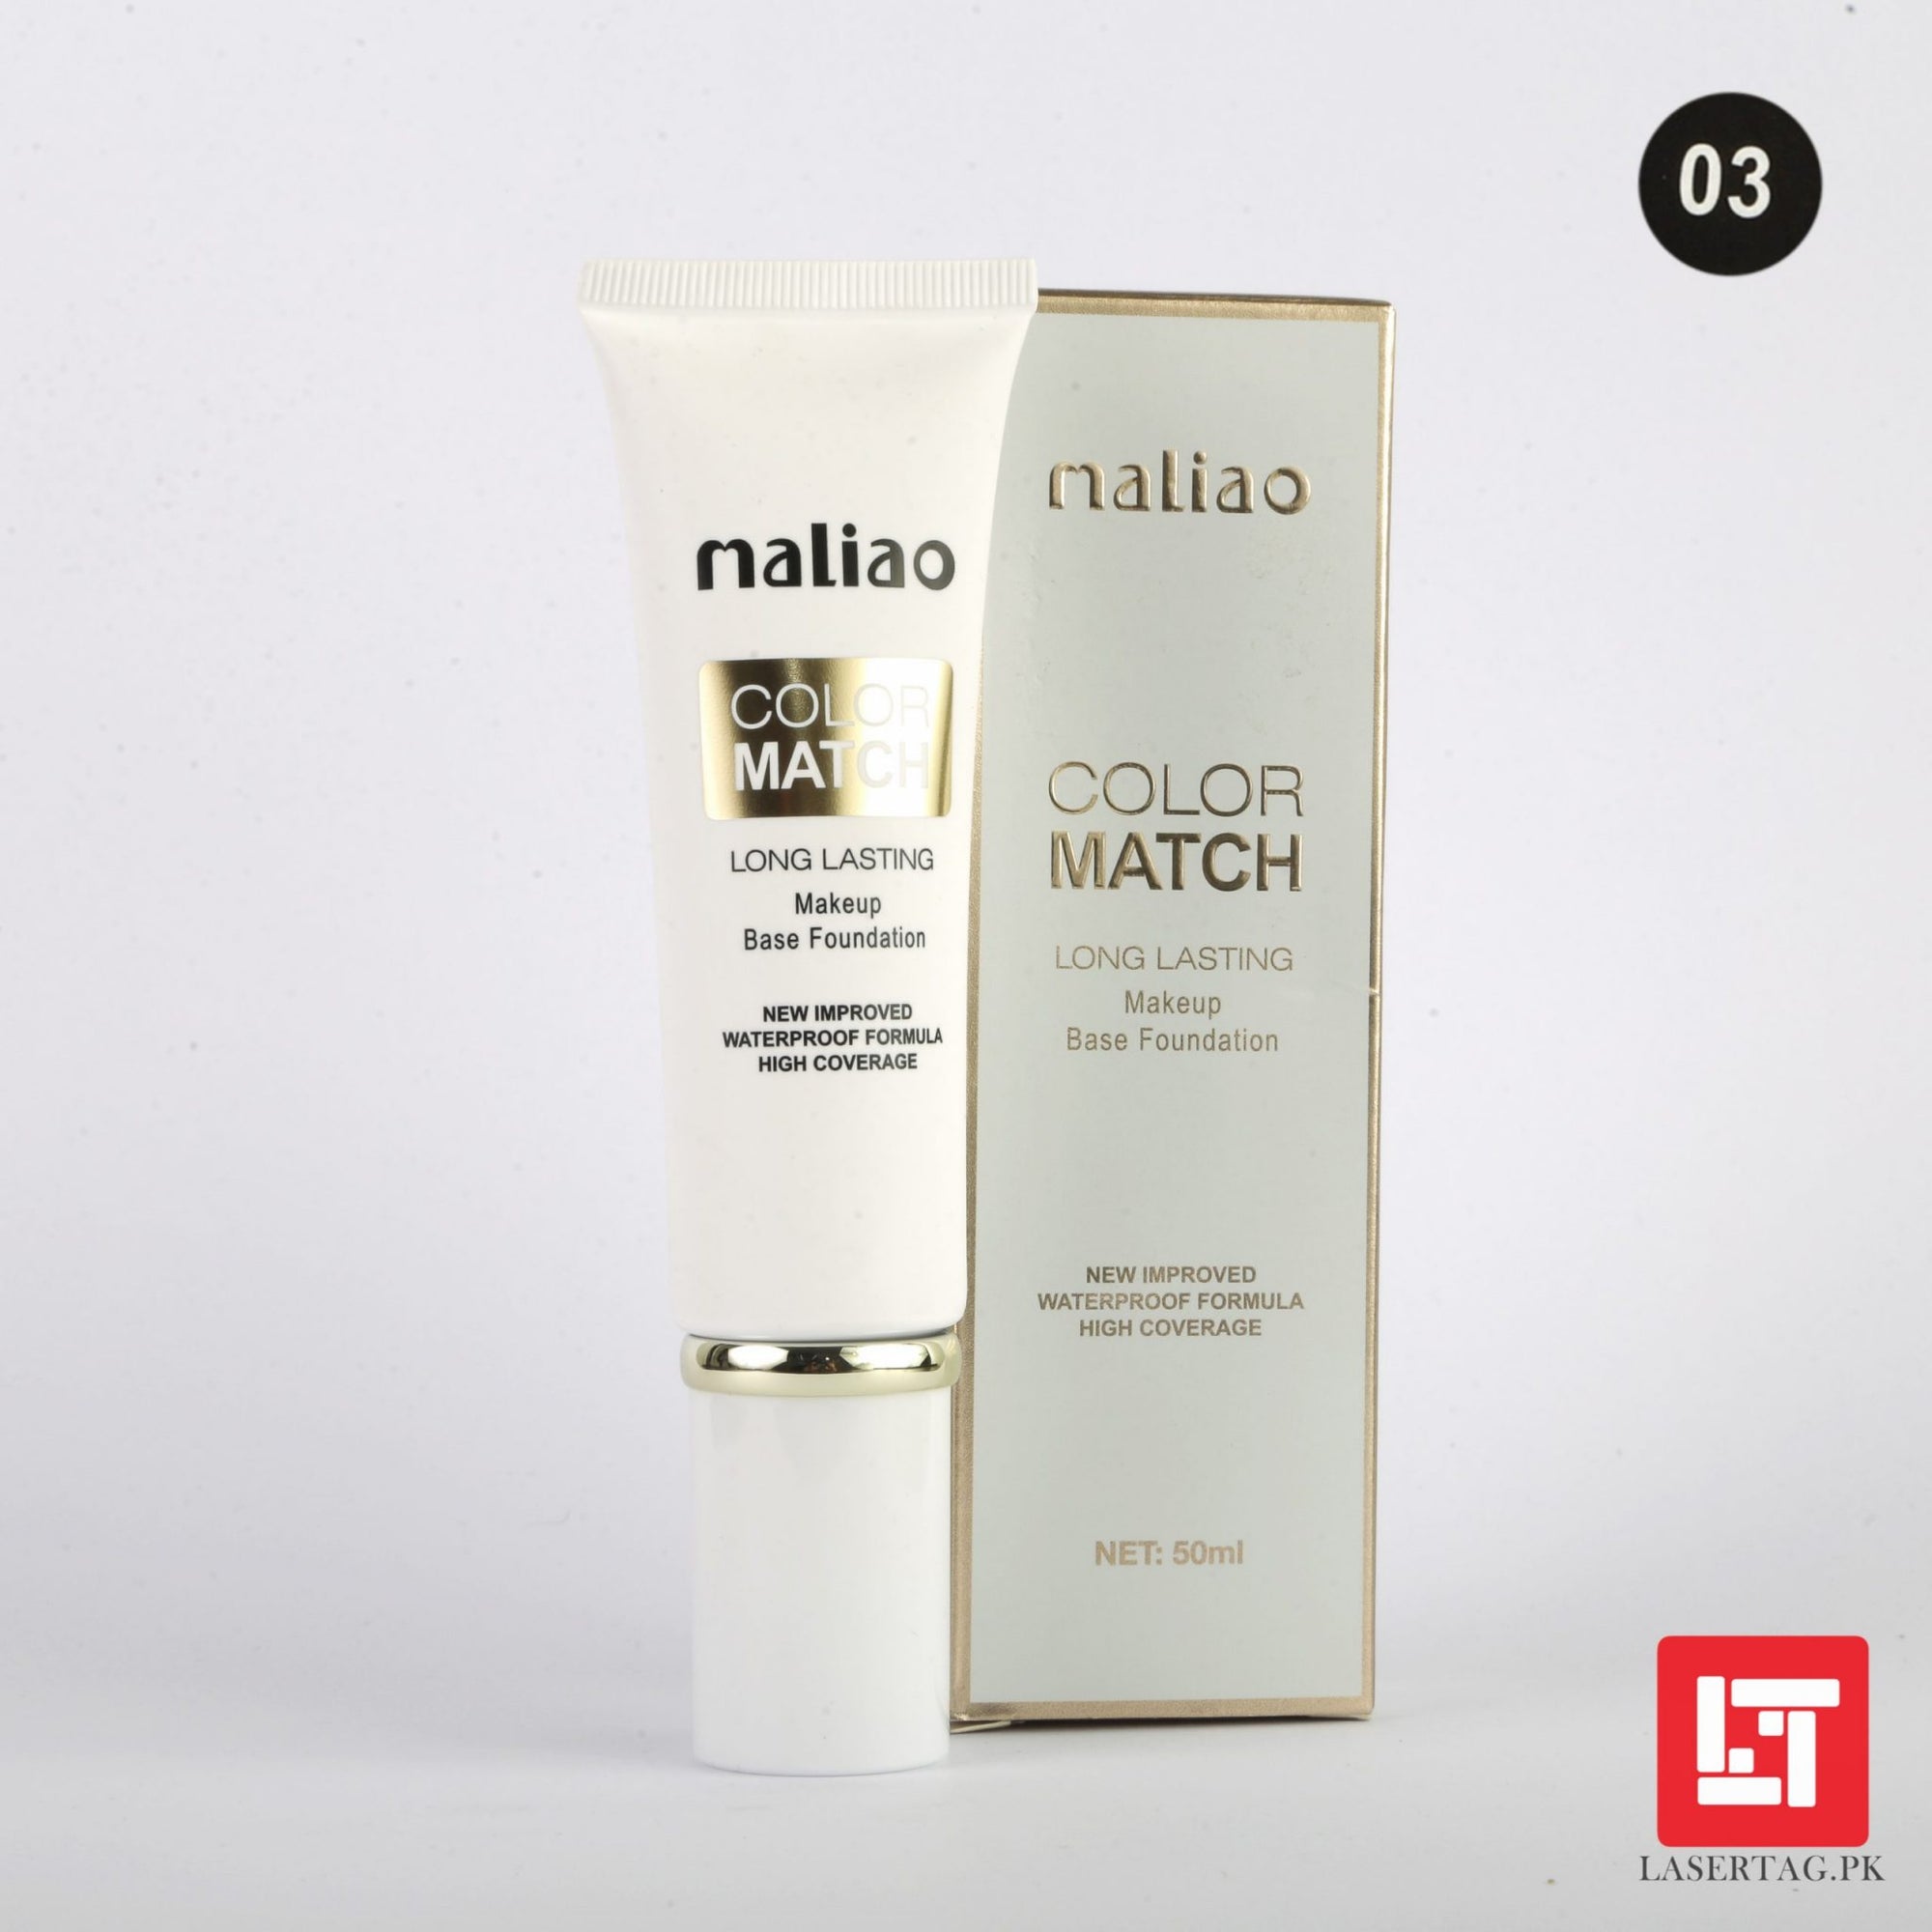 Maliao Color Match Long Lasting Makeup Base Foundation New Improved Waterproof Formula M109-03 50ml freeshipping - lasertag.pk